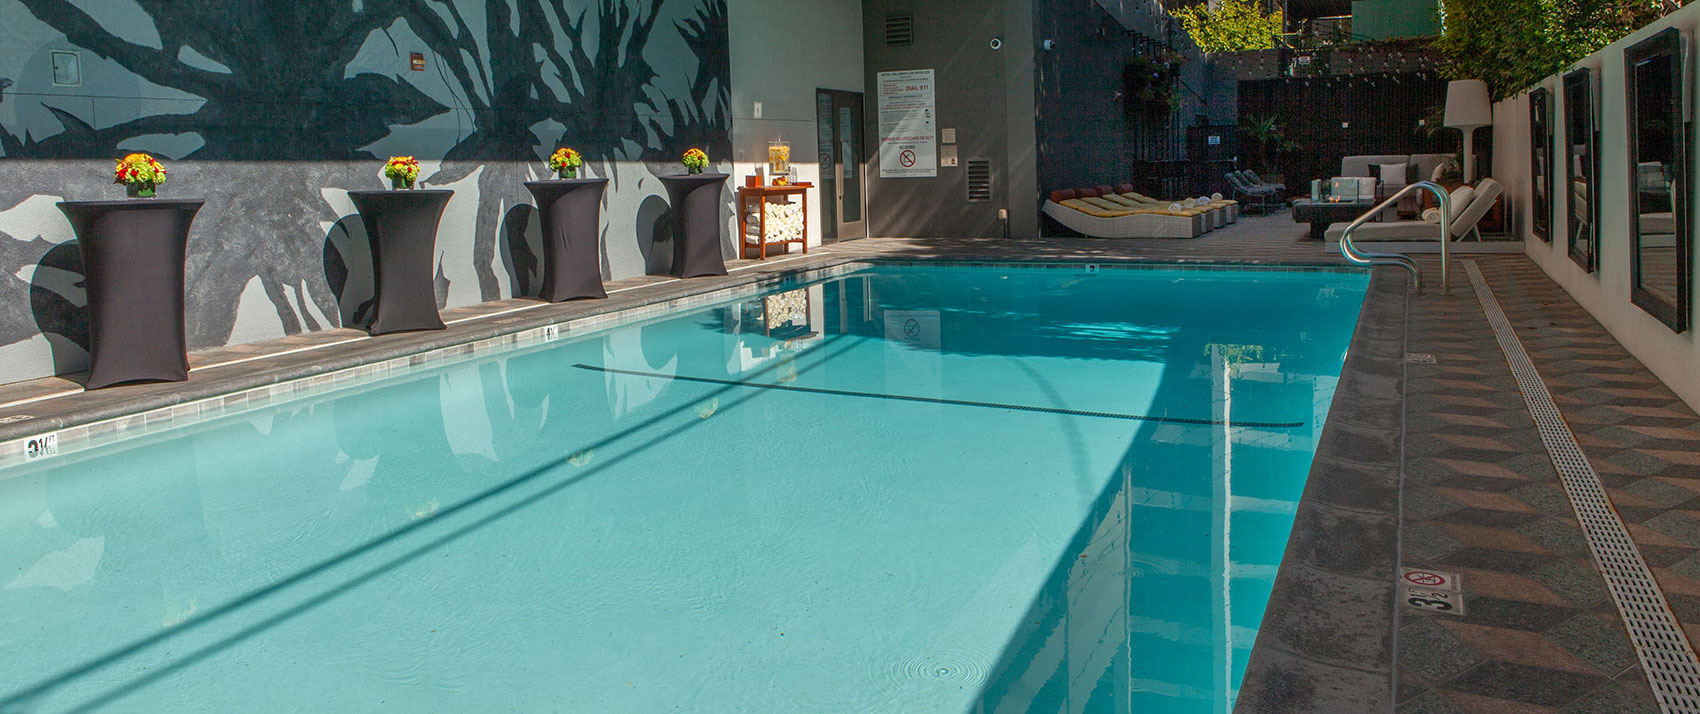 Kimpton Palomar Hotel pool